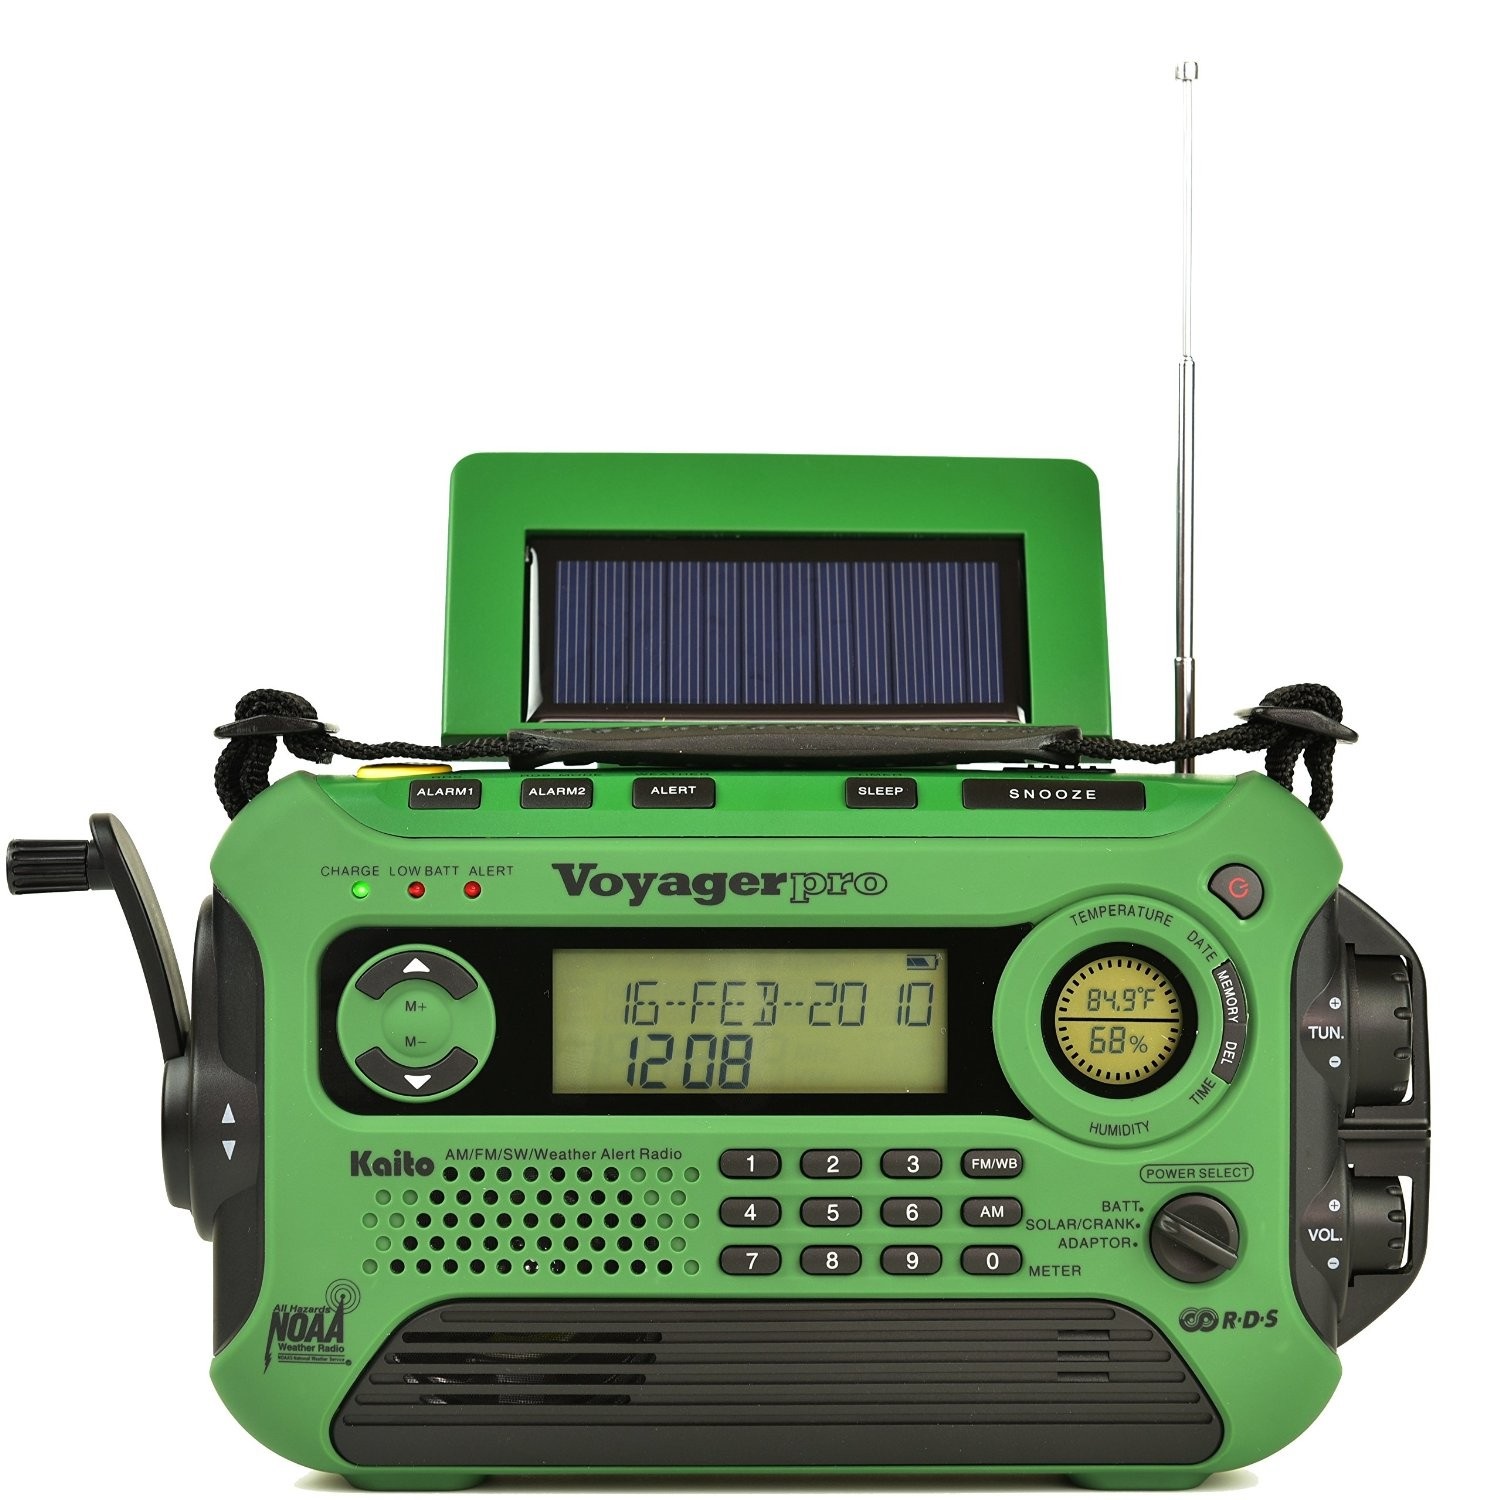 Kaito KA600 Voyager Pro Digital Radio - image 1 of 4